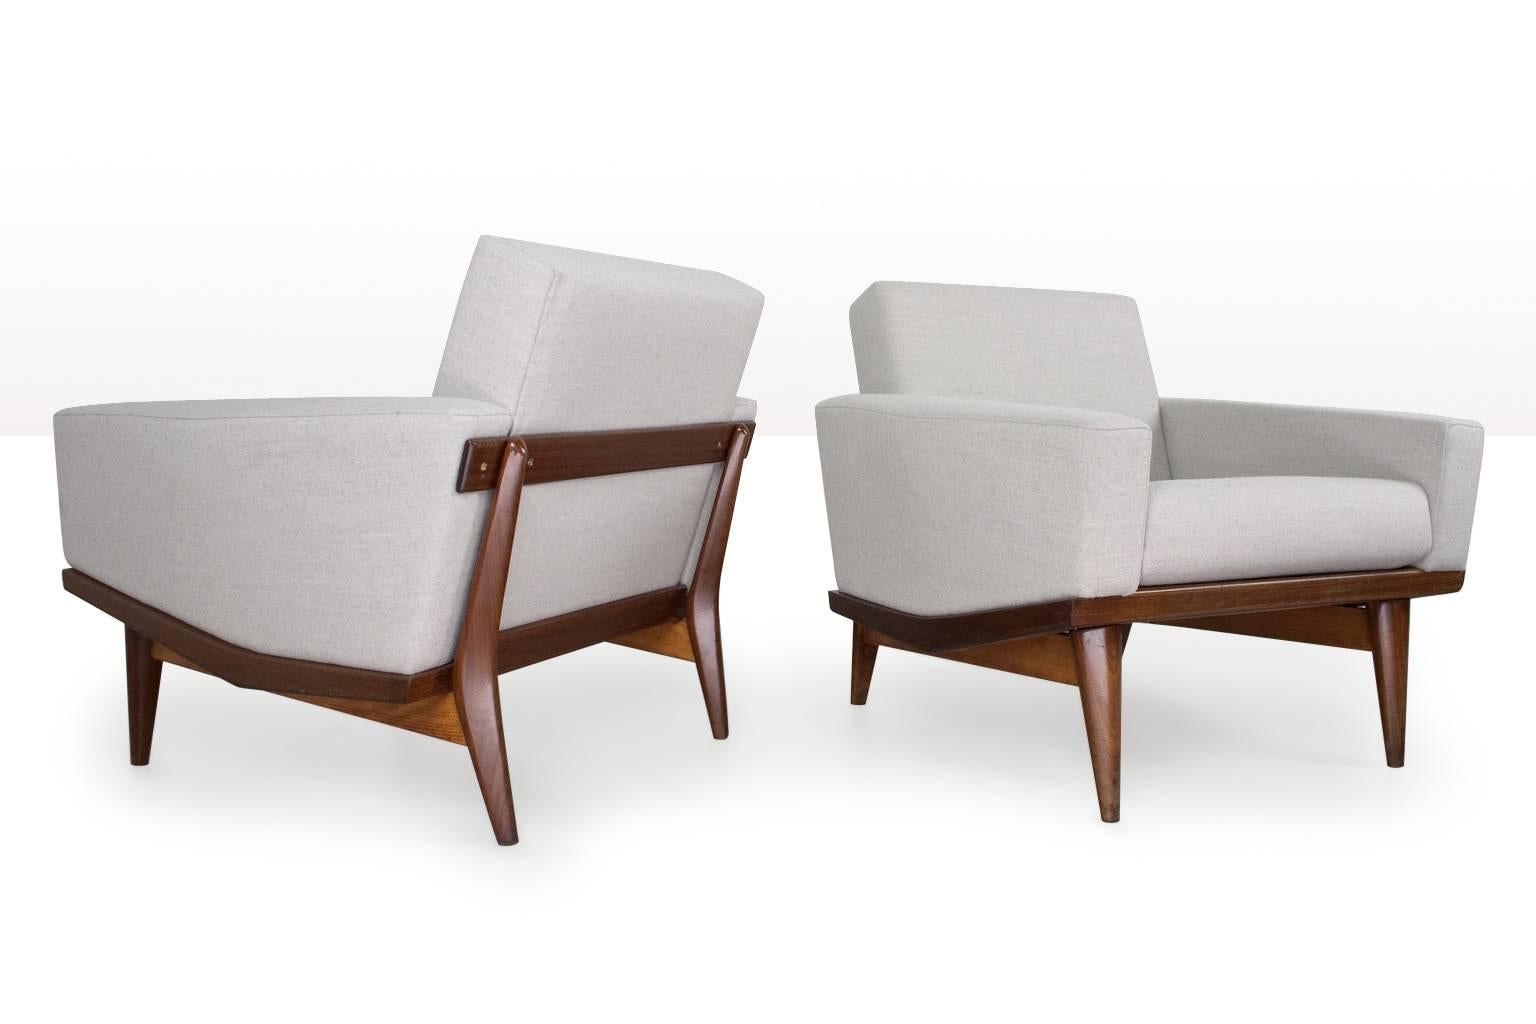 Danish Scandinavian Modern Pair of Lounge Chairs in grey by Wikkelso, 1962 Denmark